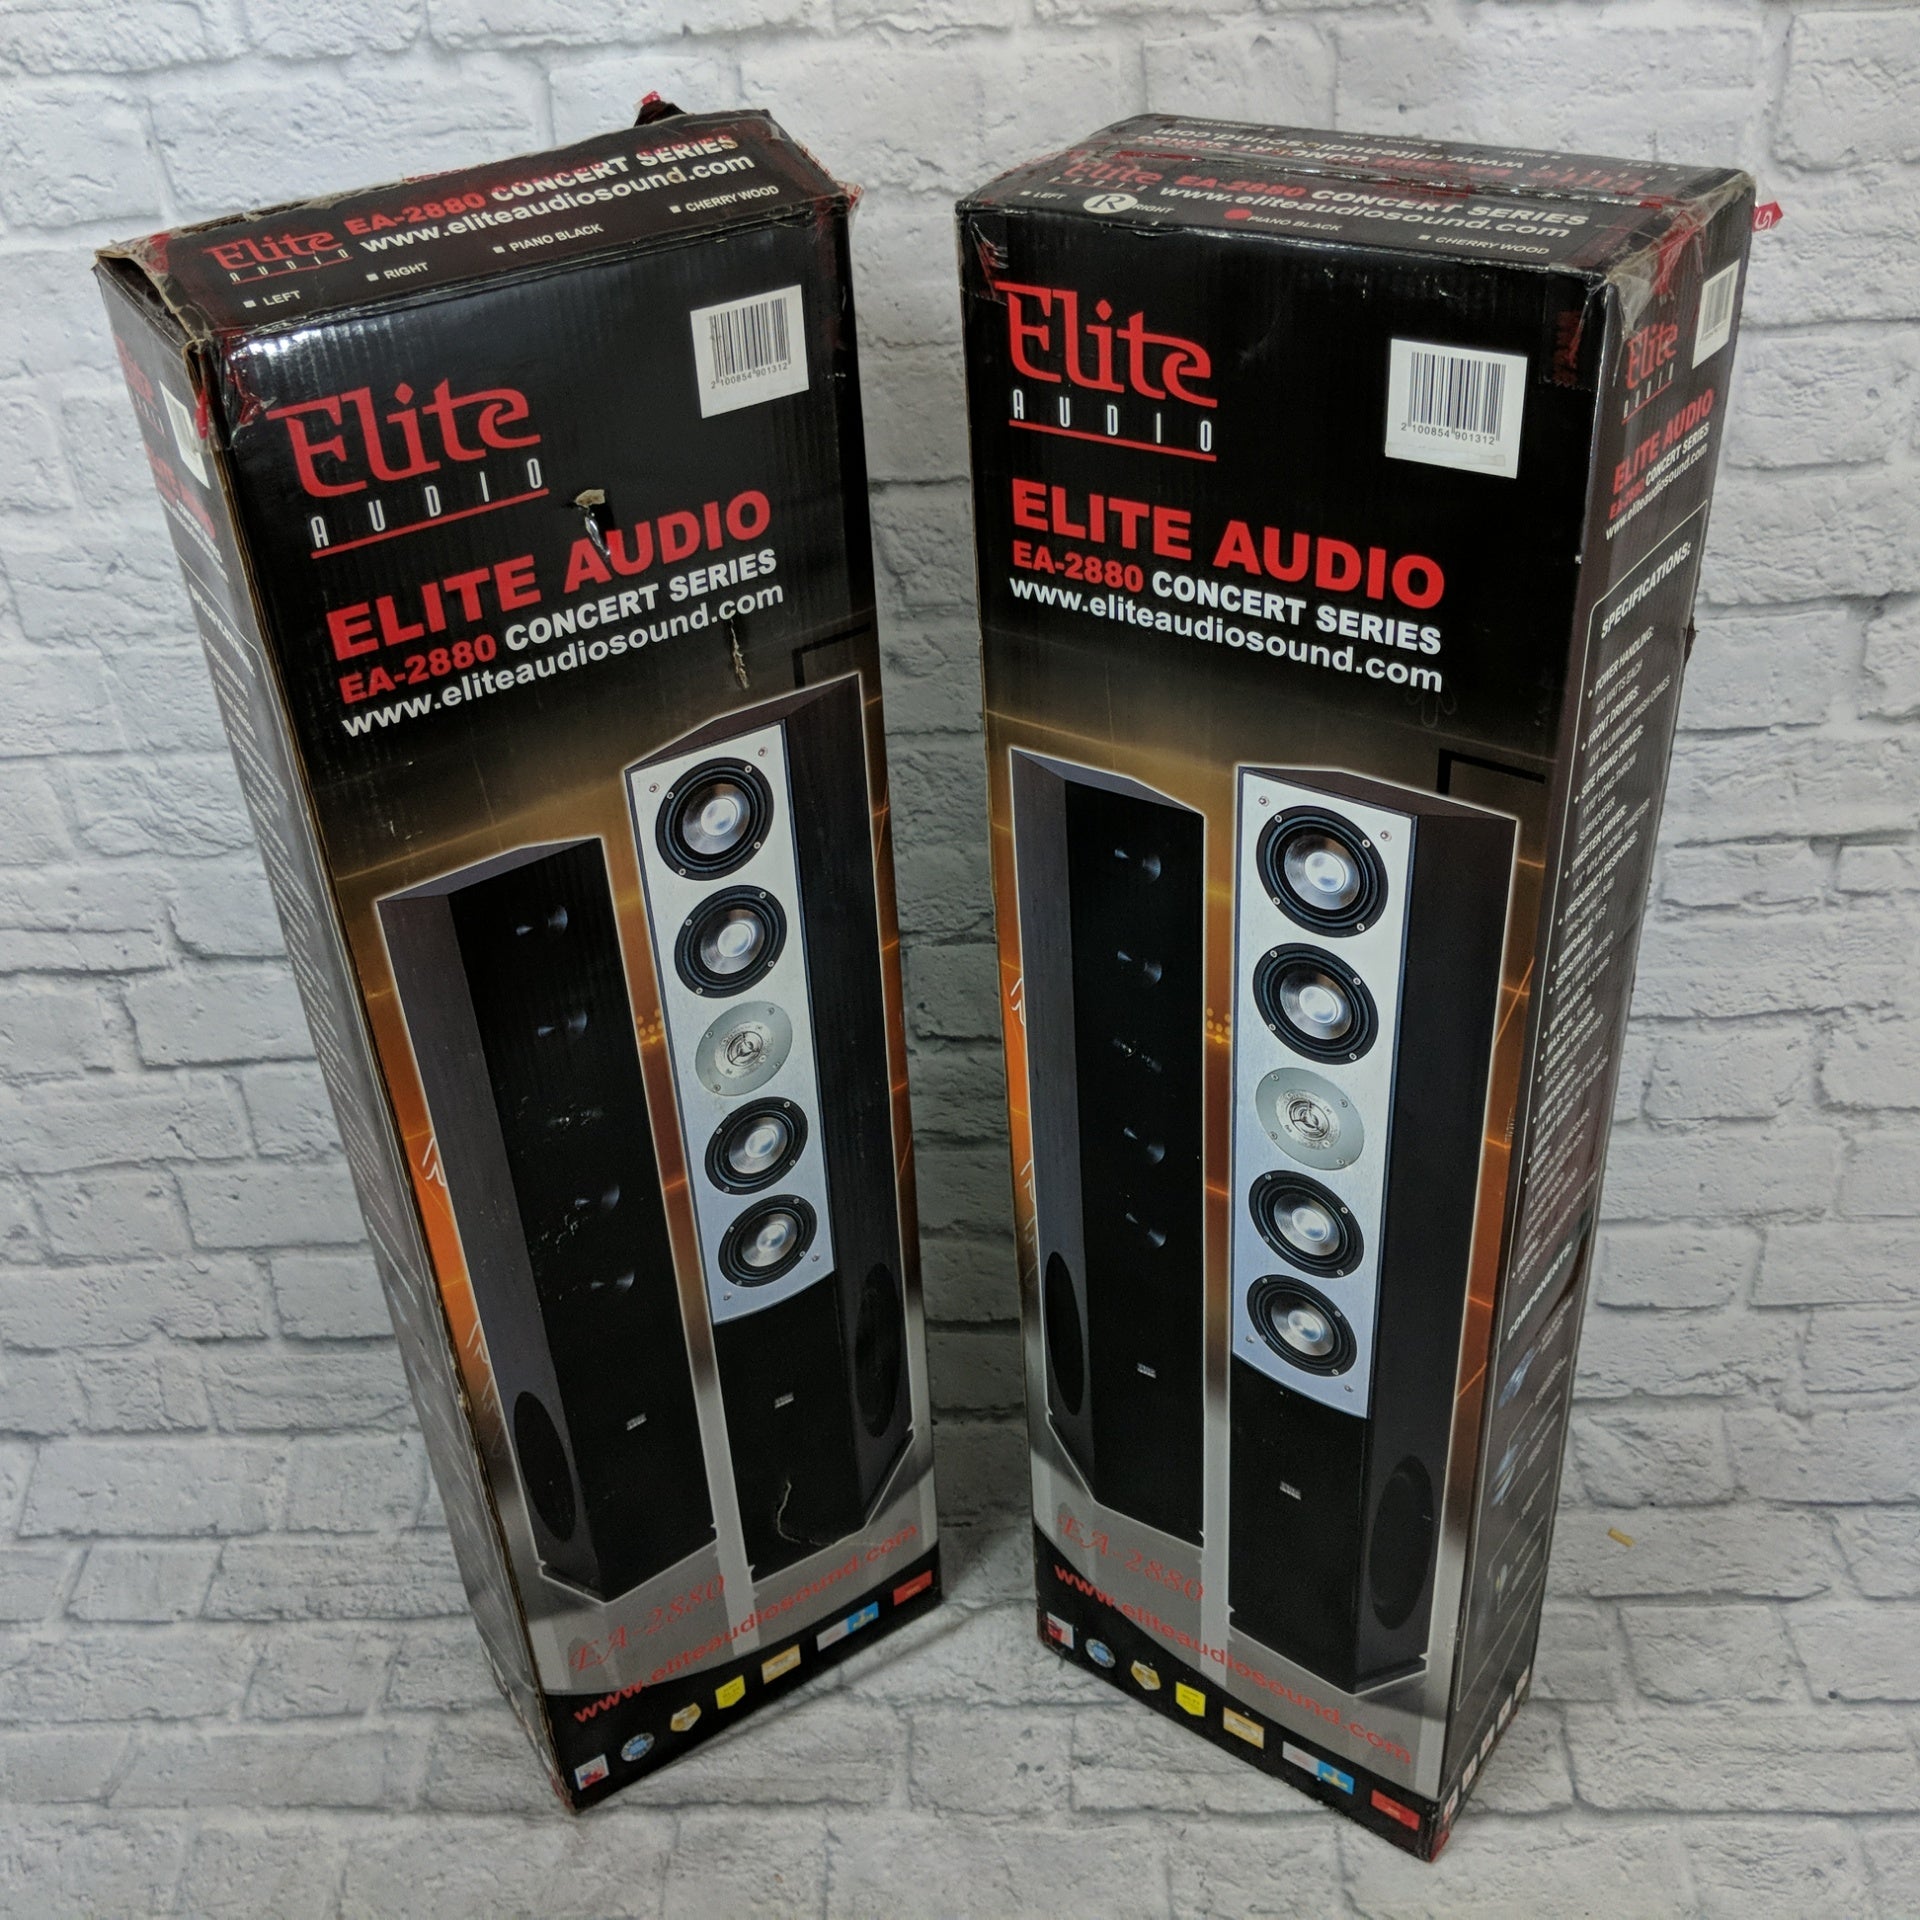 Elite EA-2880 Concert Series Home Audio Speakers - Evolution Music